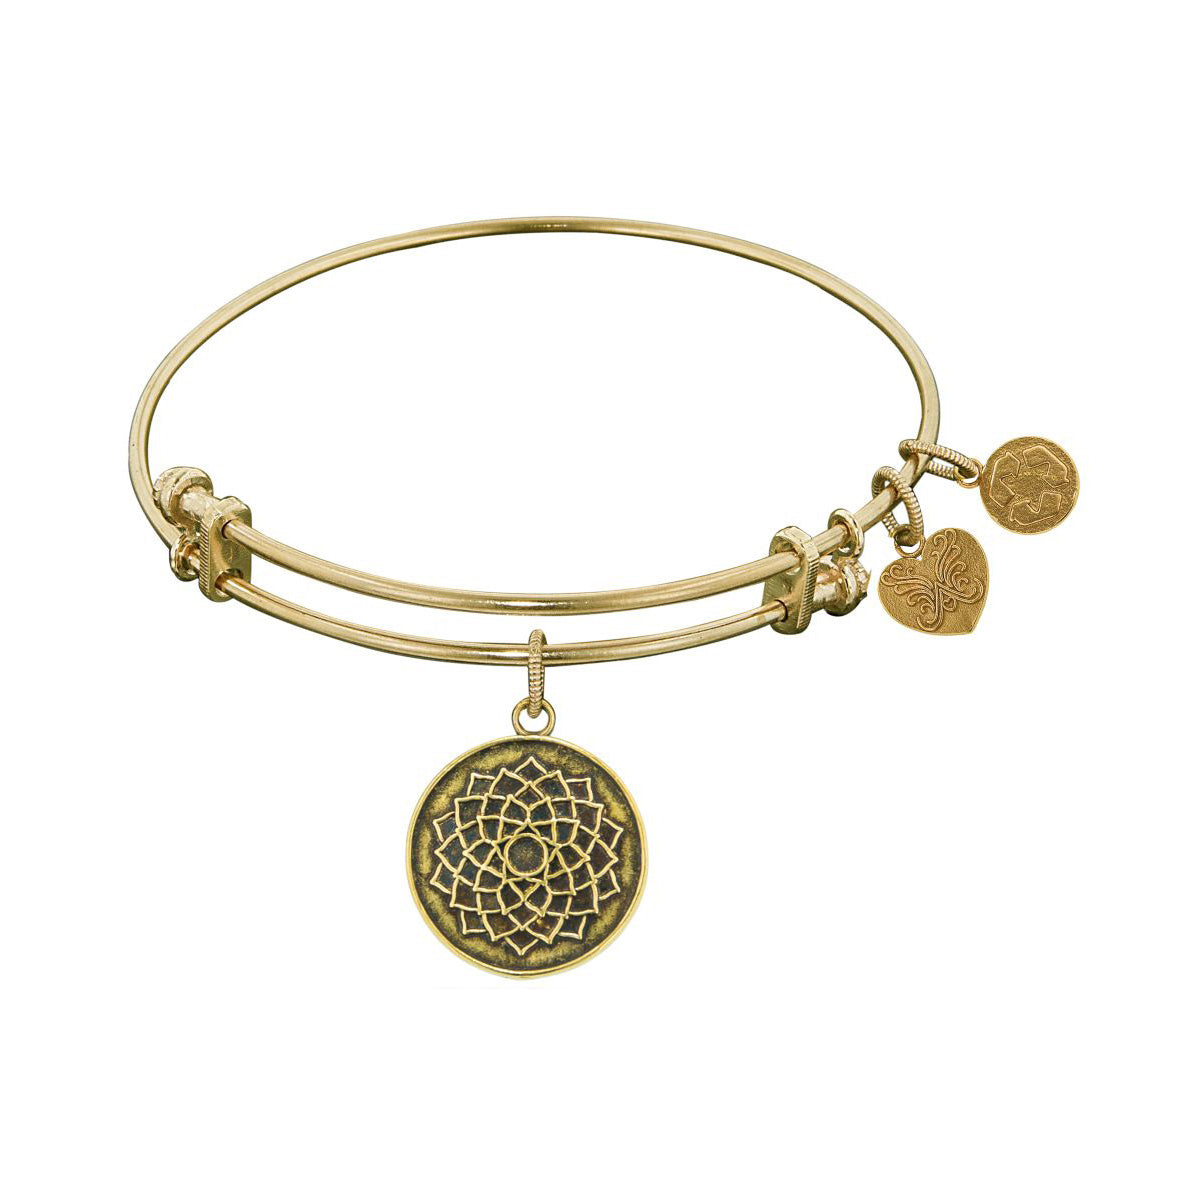 Smooth Finish Brass Lotus Flower Angelica Bangle Bracelet, 7.25" fine designer jewelry for men and women